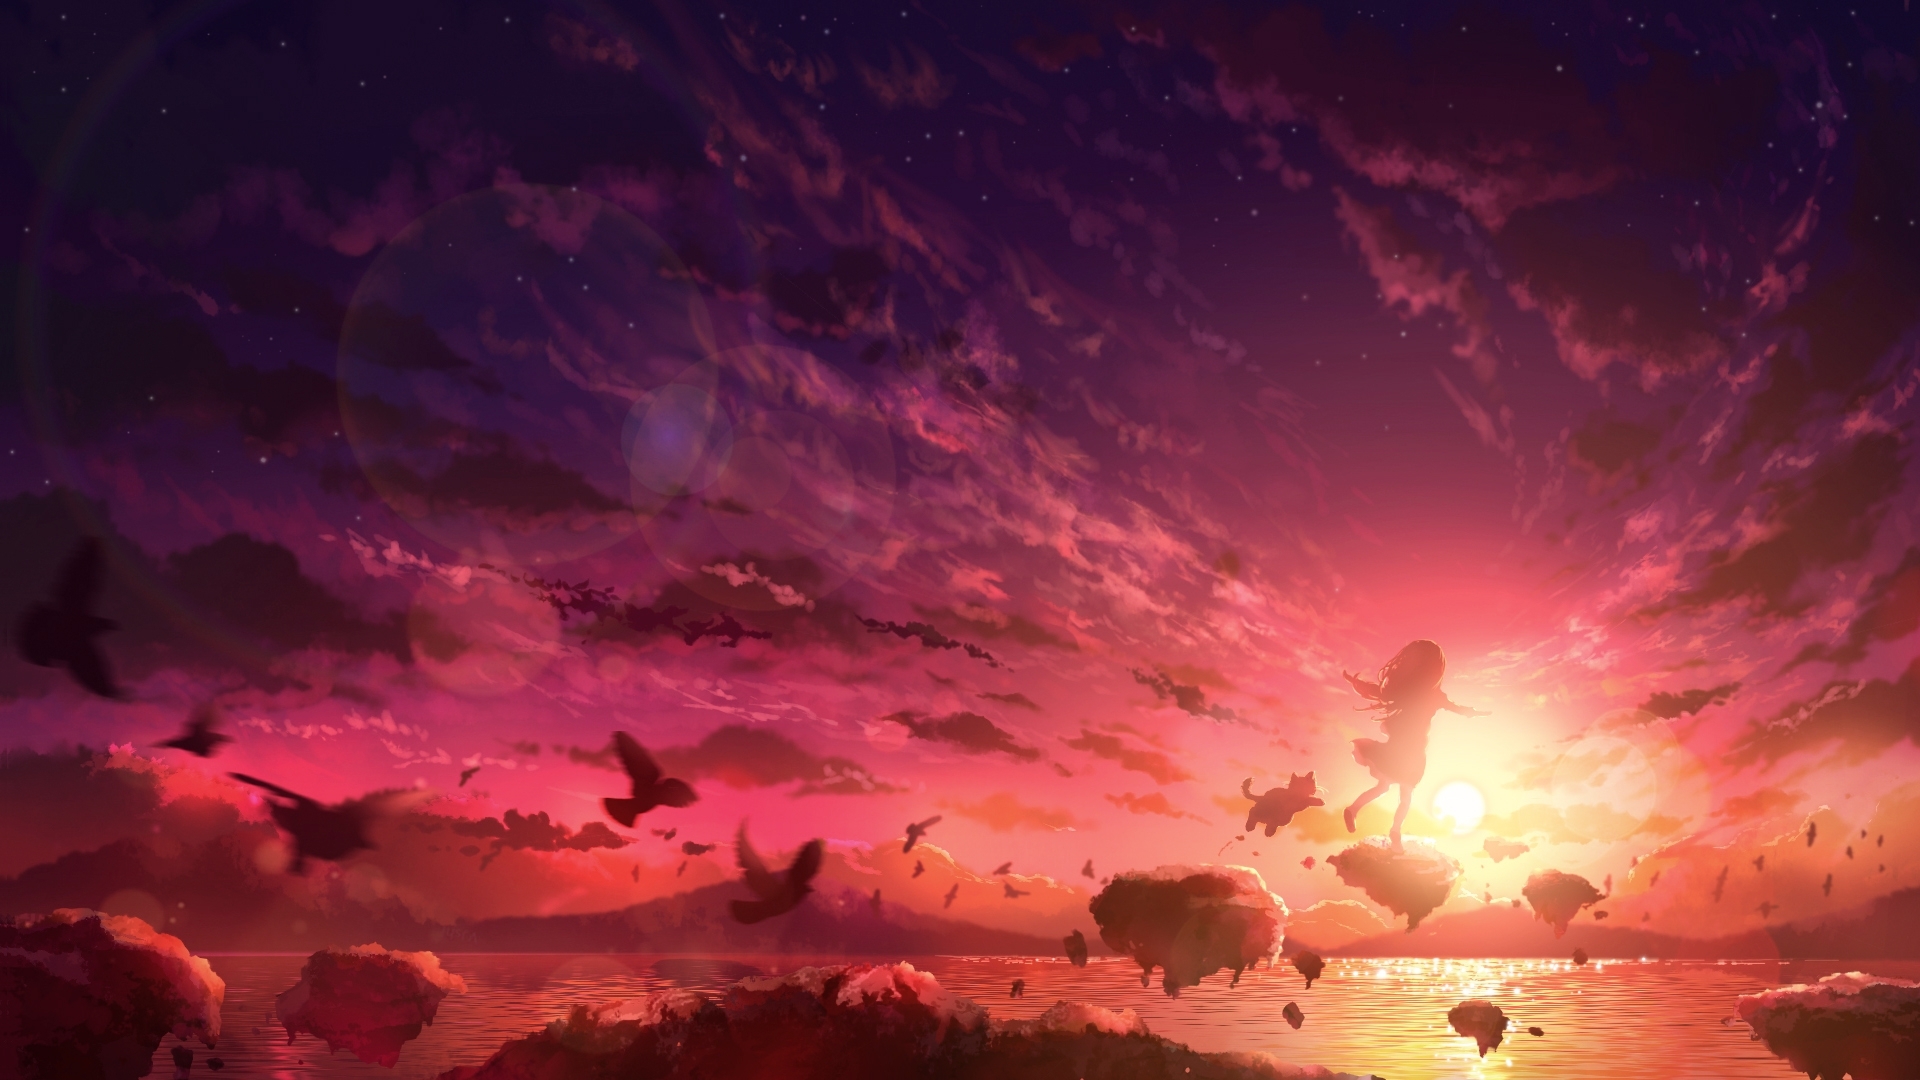 Anime Sunset Images  Free Download on Freepik